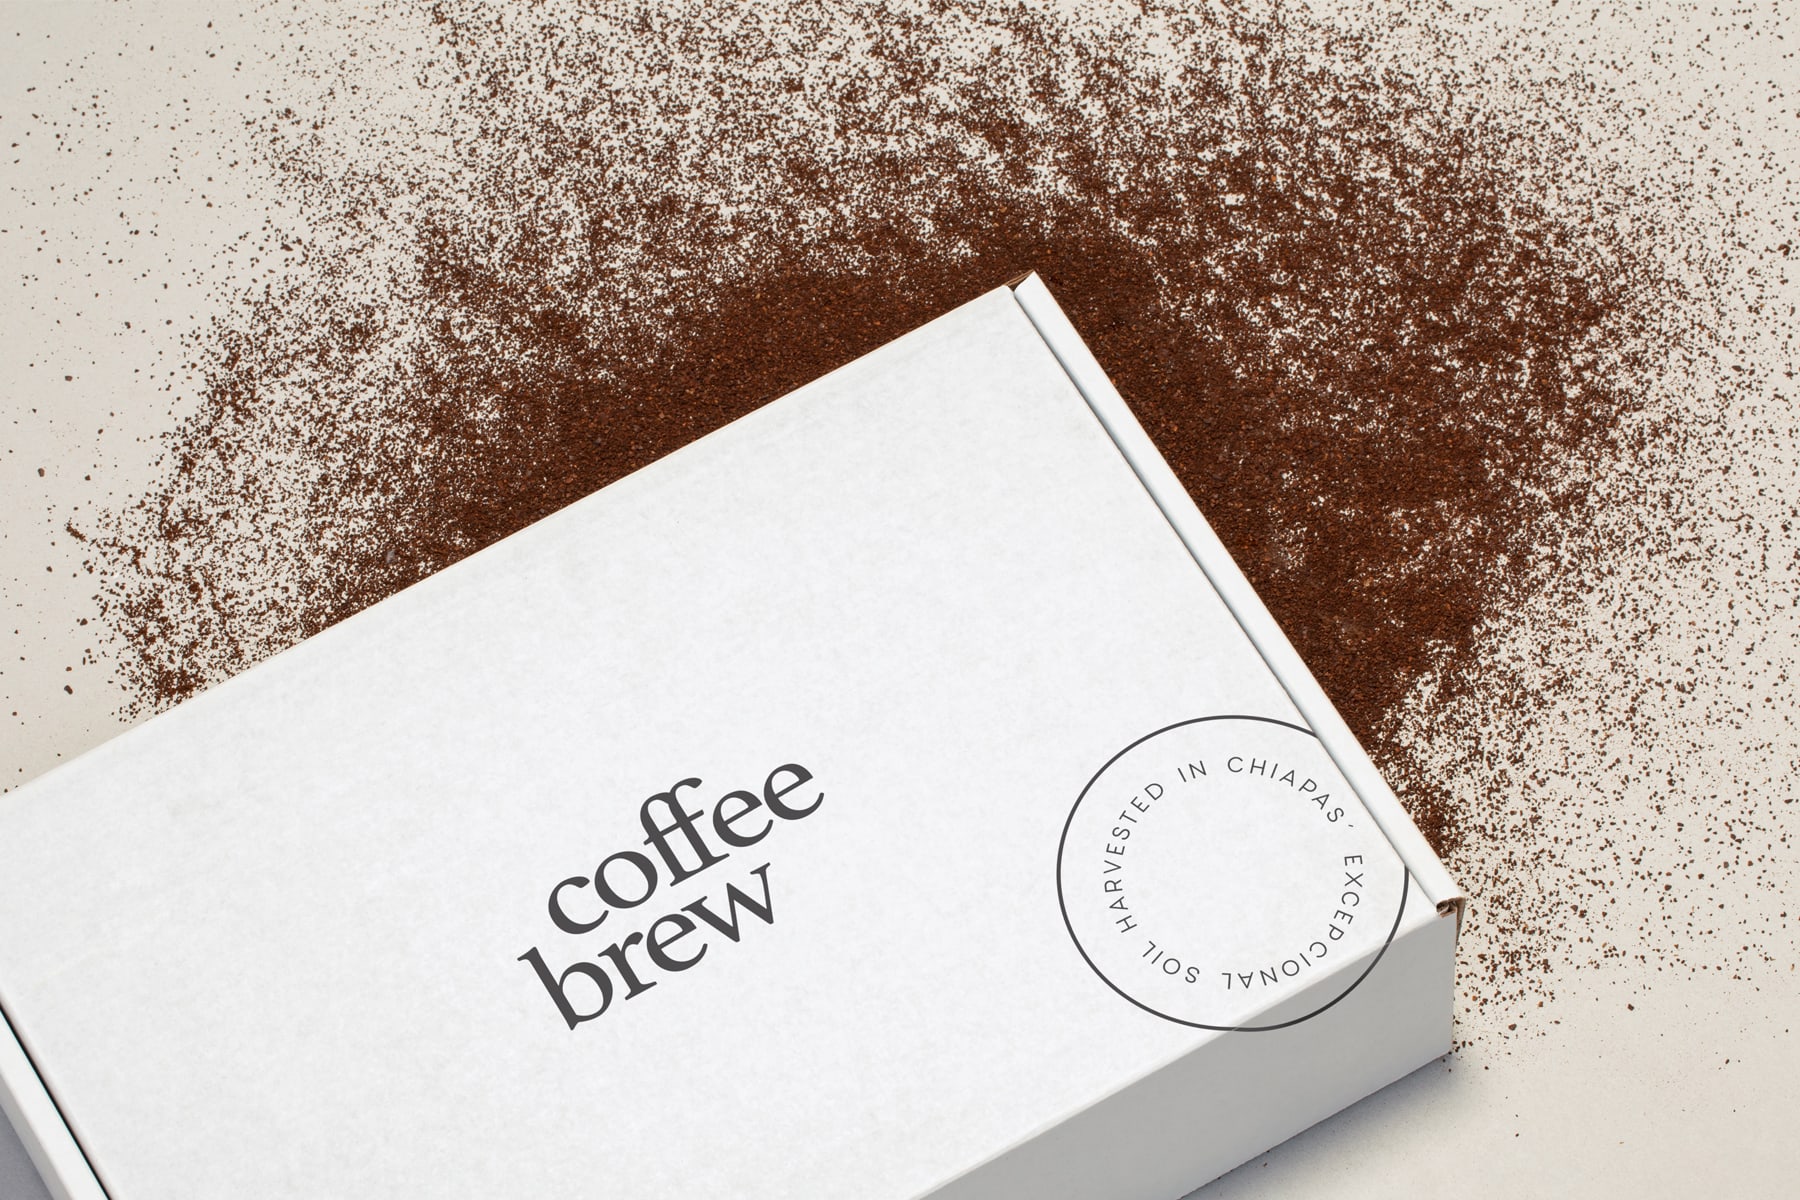 Coffee Brew咖啡袋包装设计